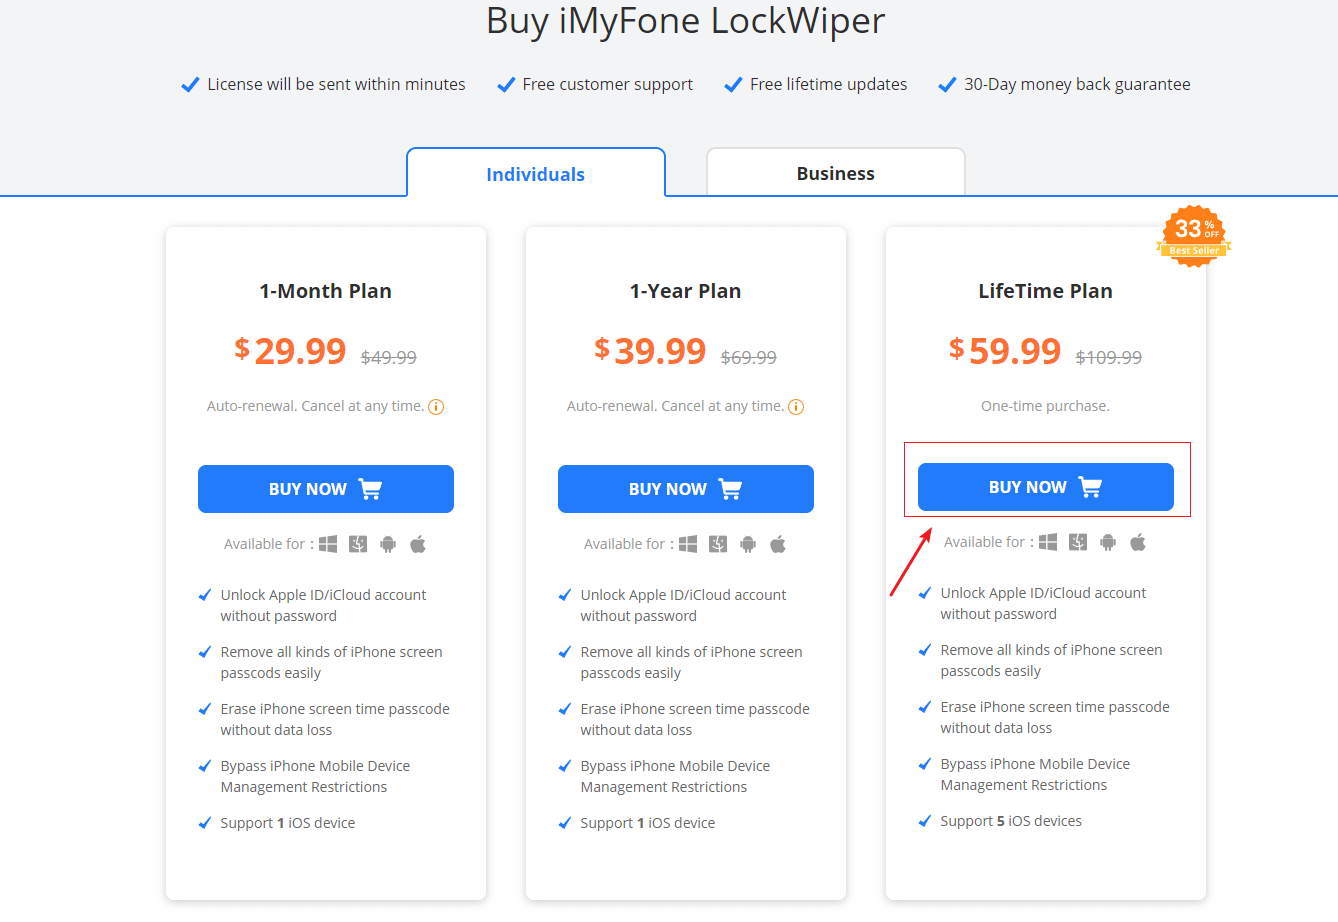 iMyFone LockWiper purchase page